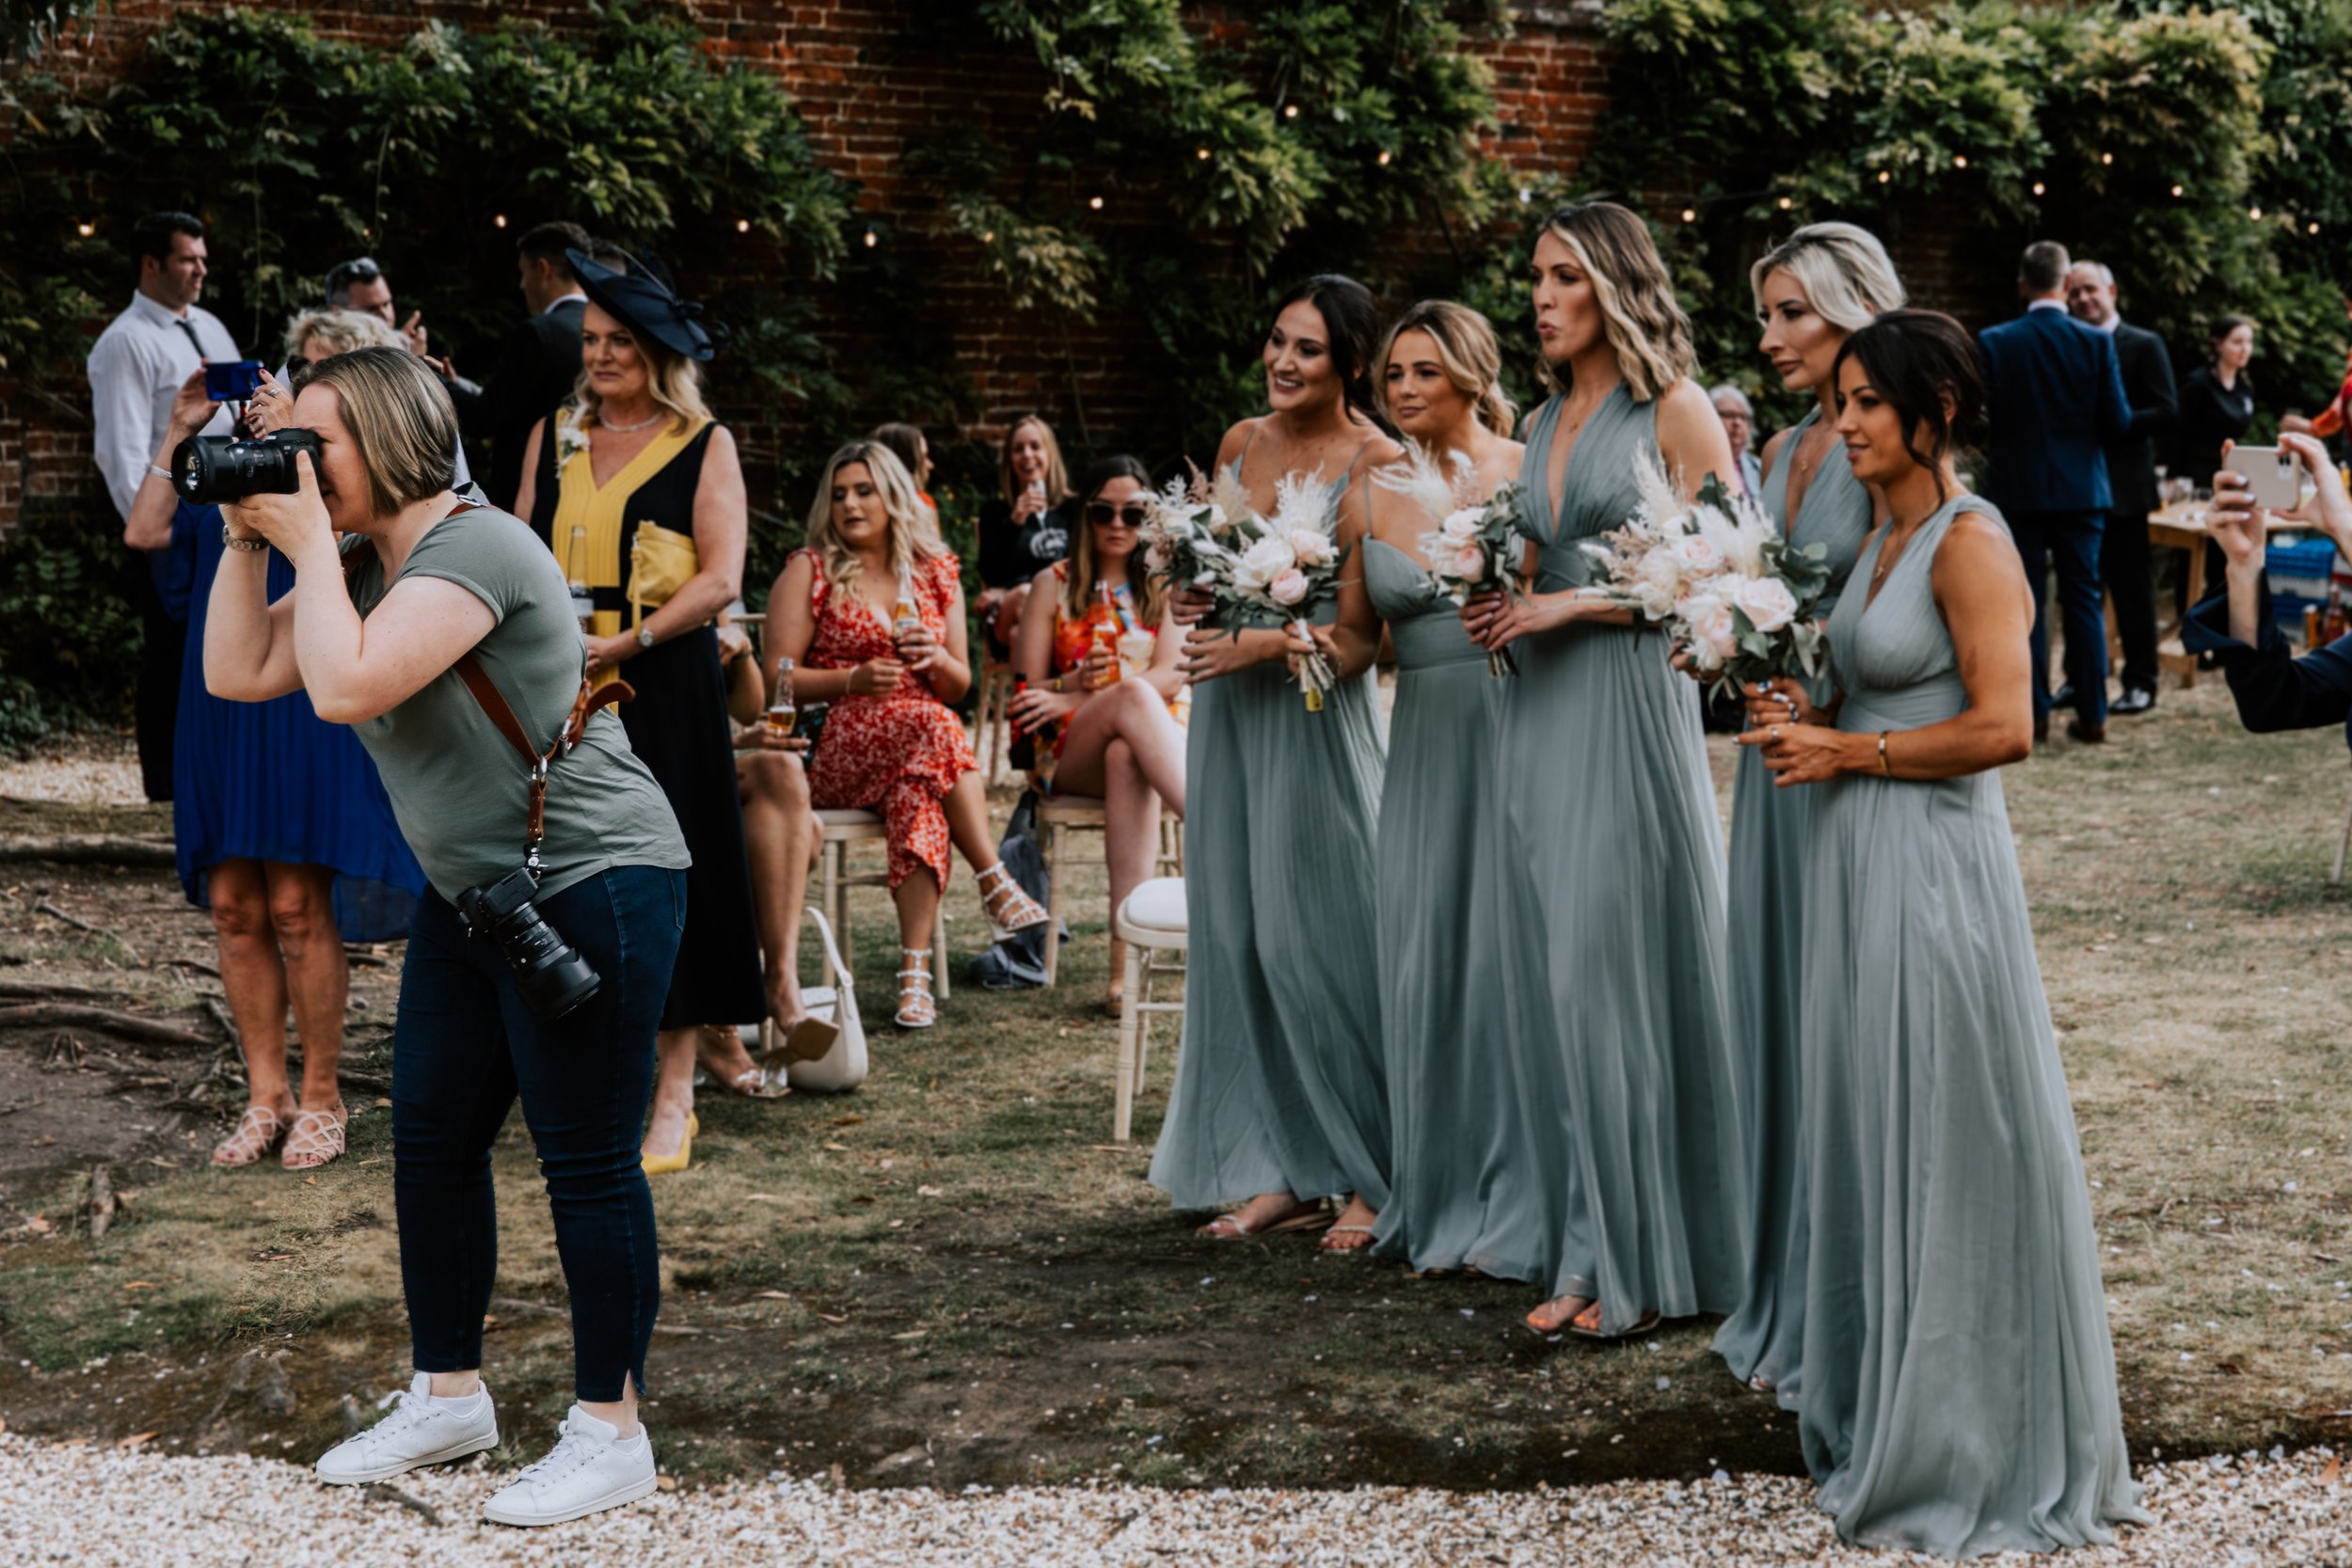 Essex-wedding-photographer-48.jpg